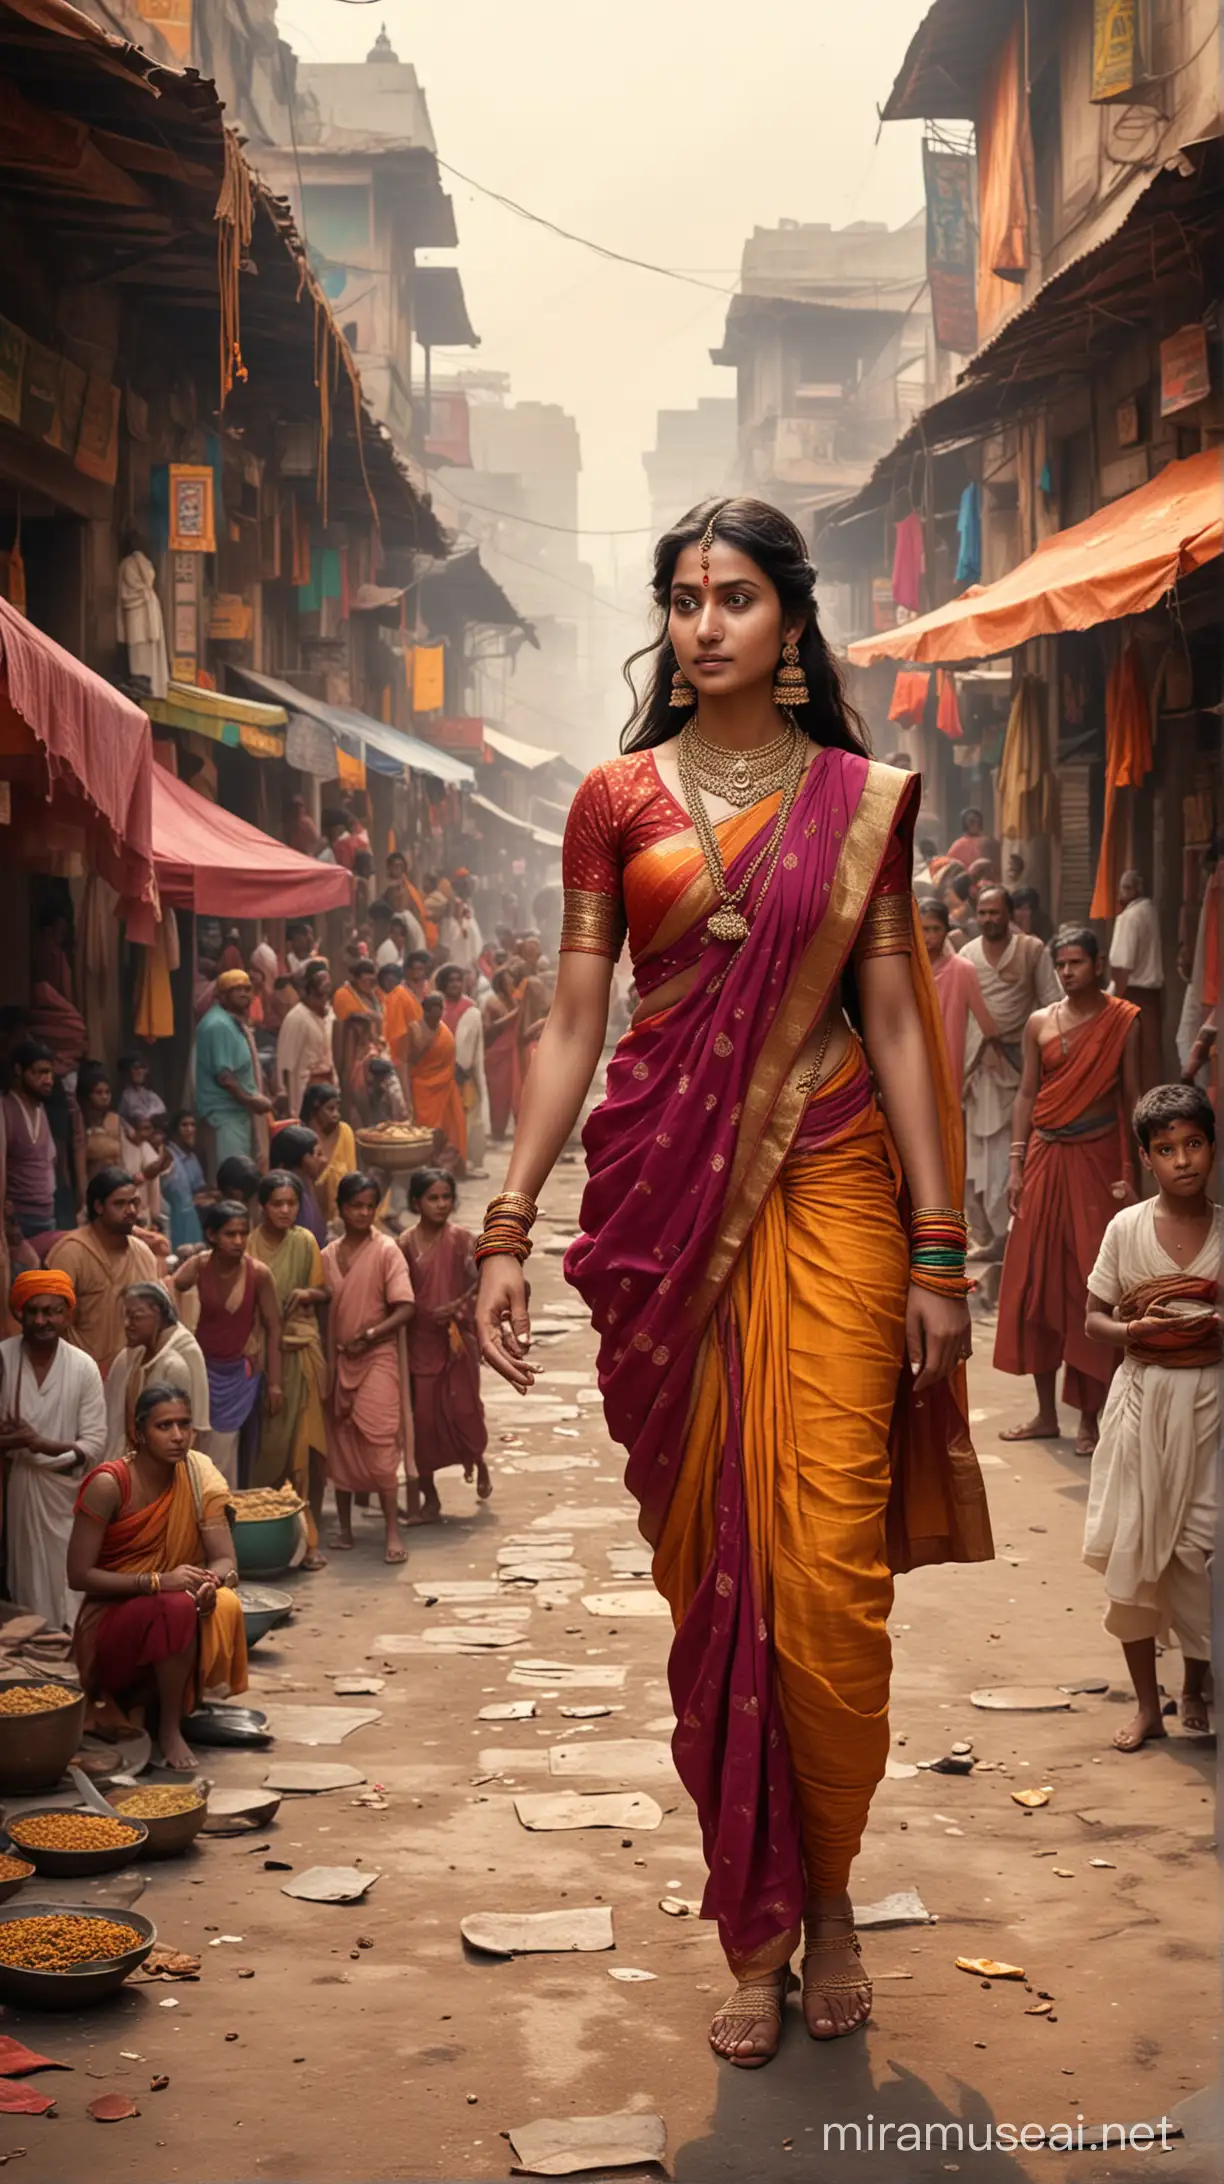 Vibrant Depiction of Ancient India Colorful Markets and Courageous Lakshmi Bai